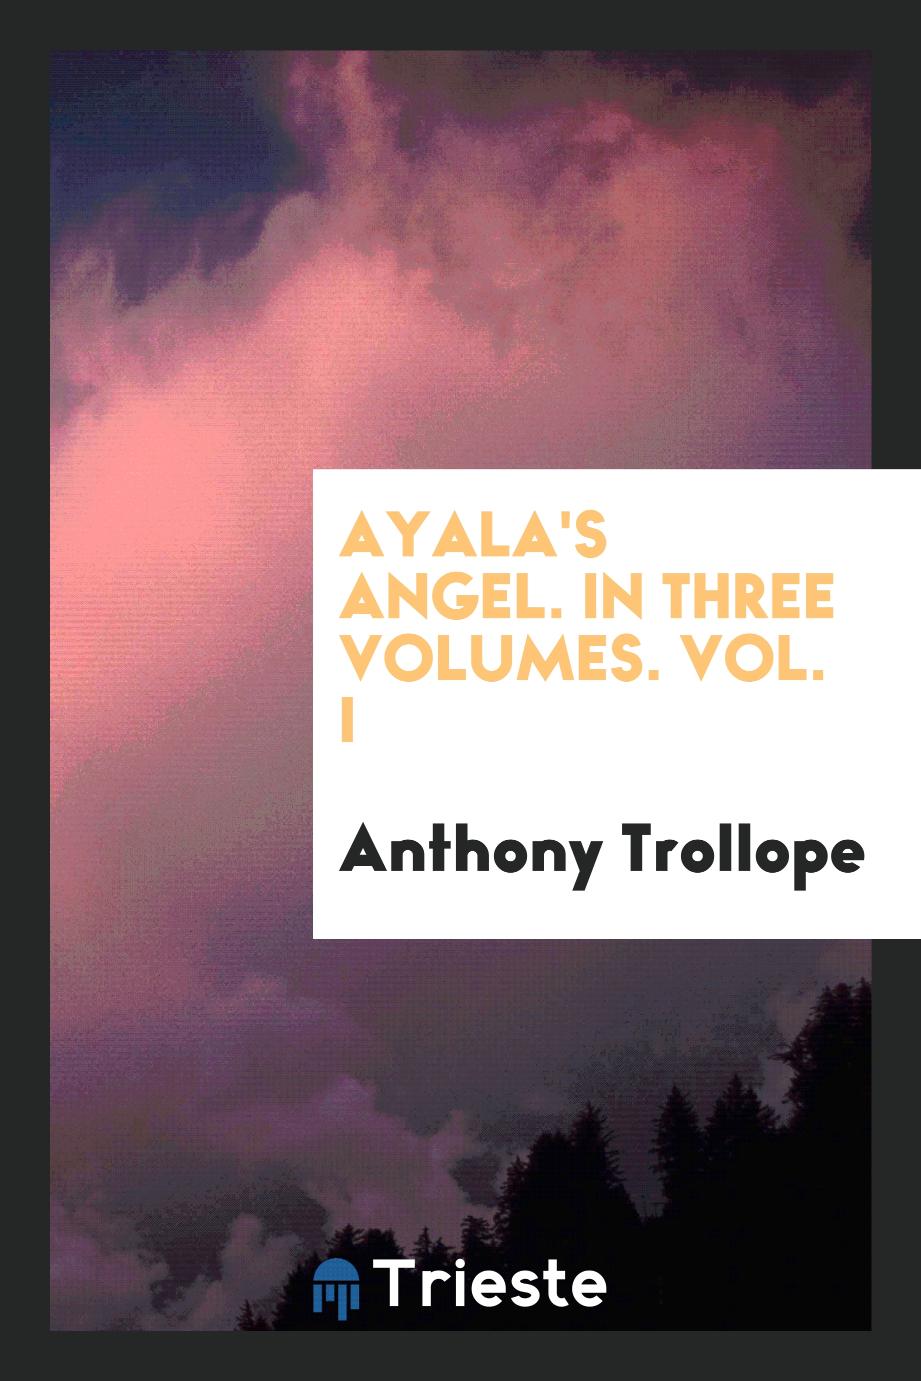 Ayala's angel. In three volumes. Vol. I